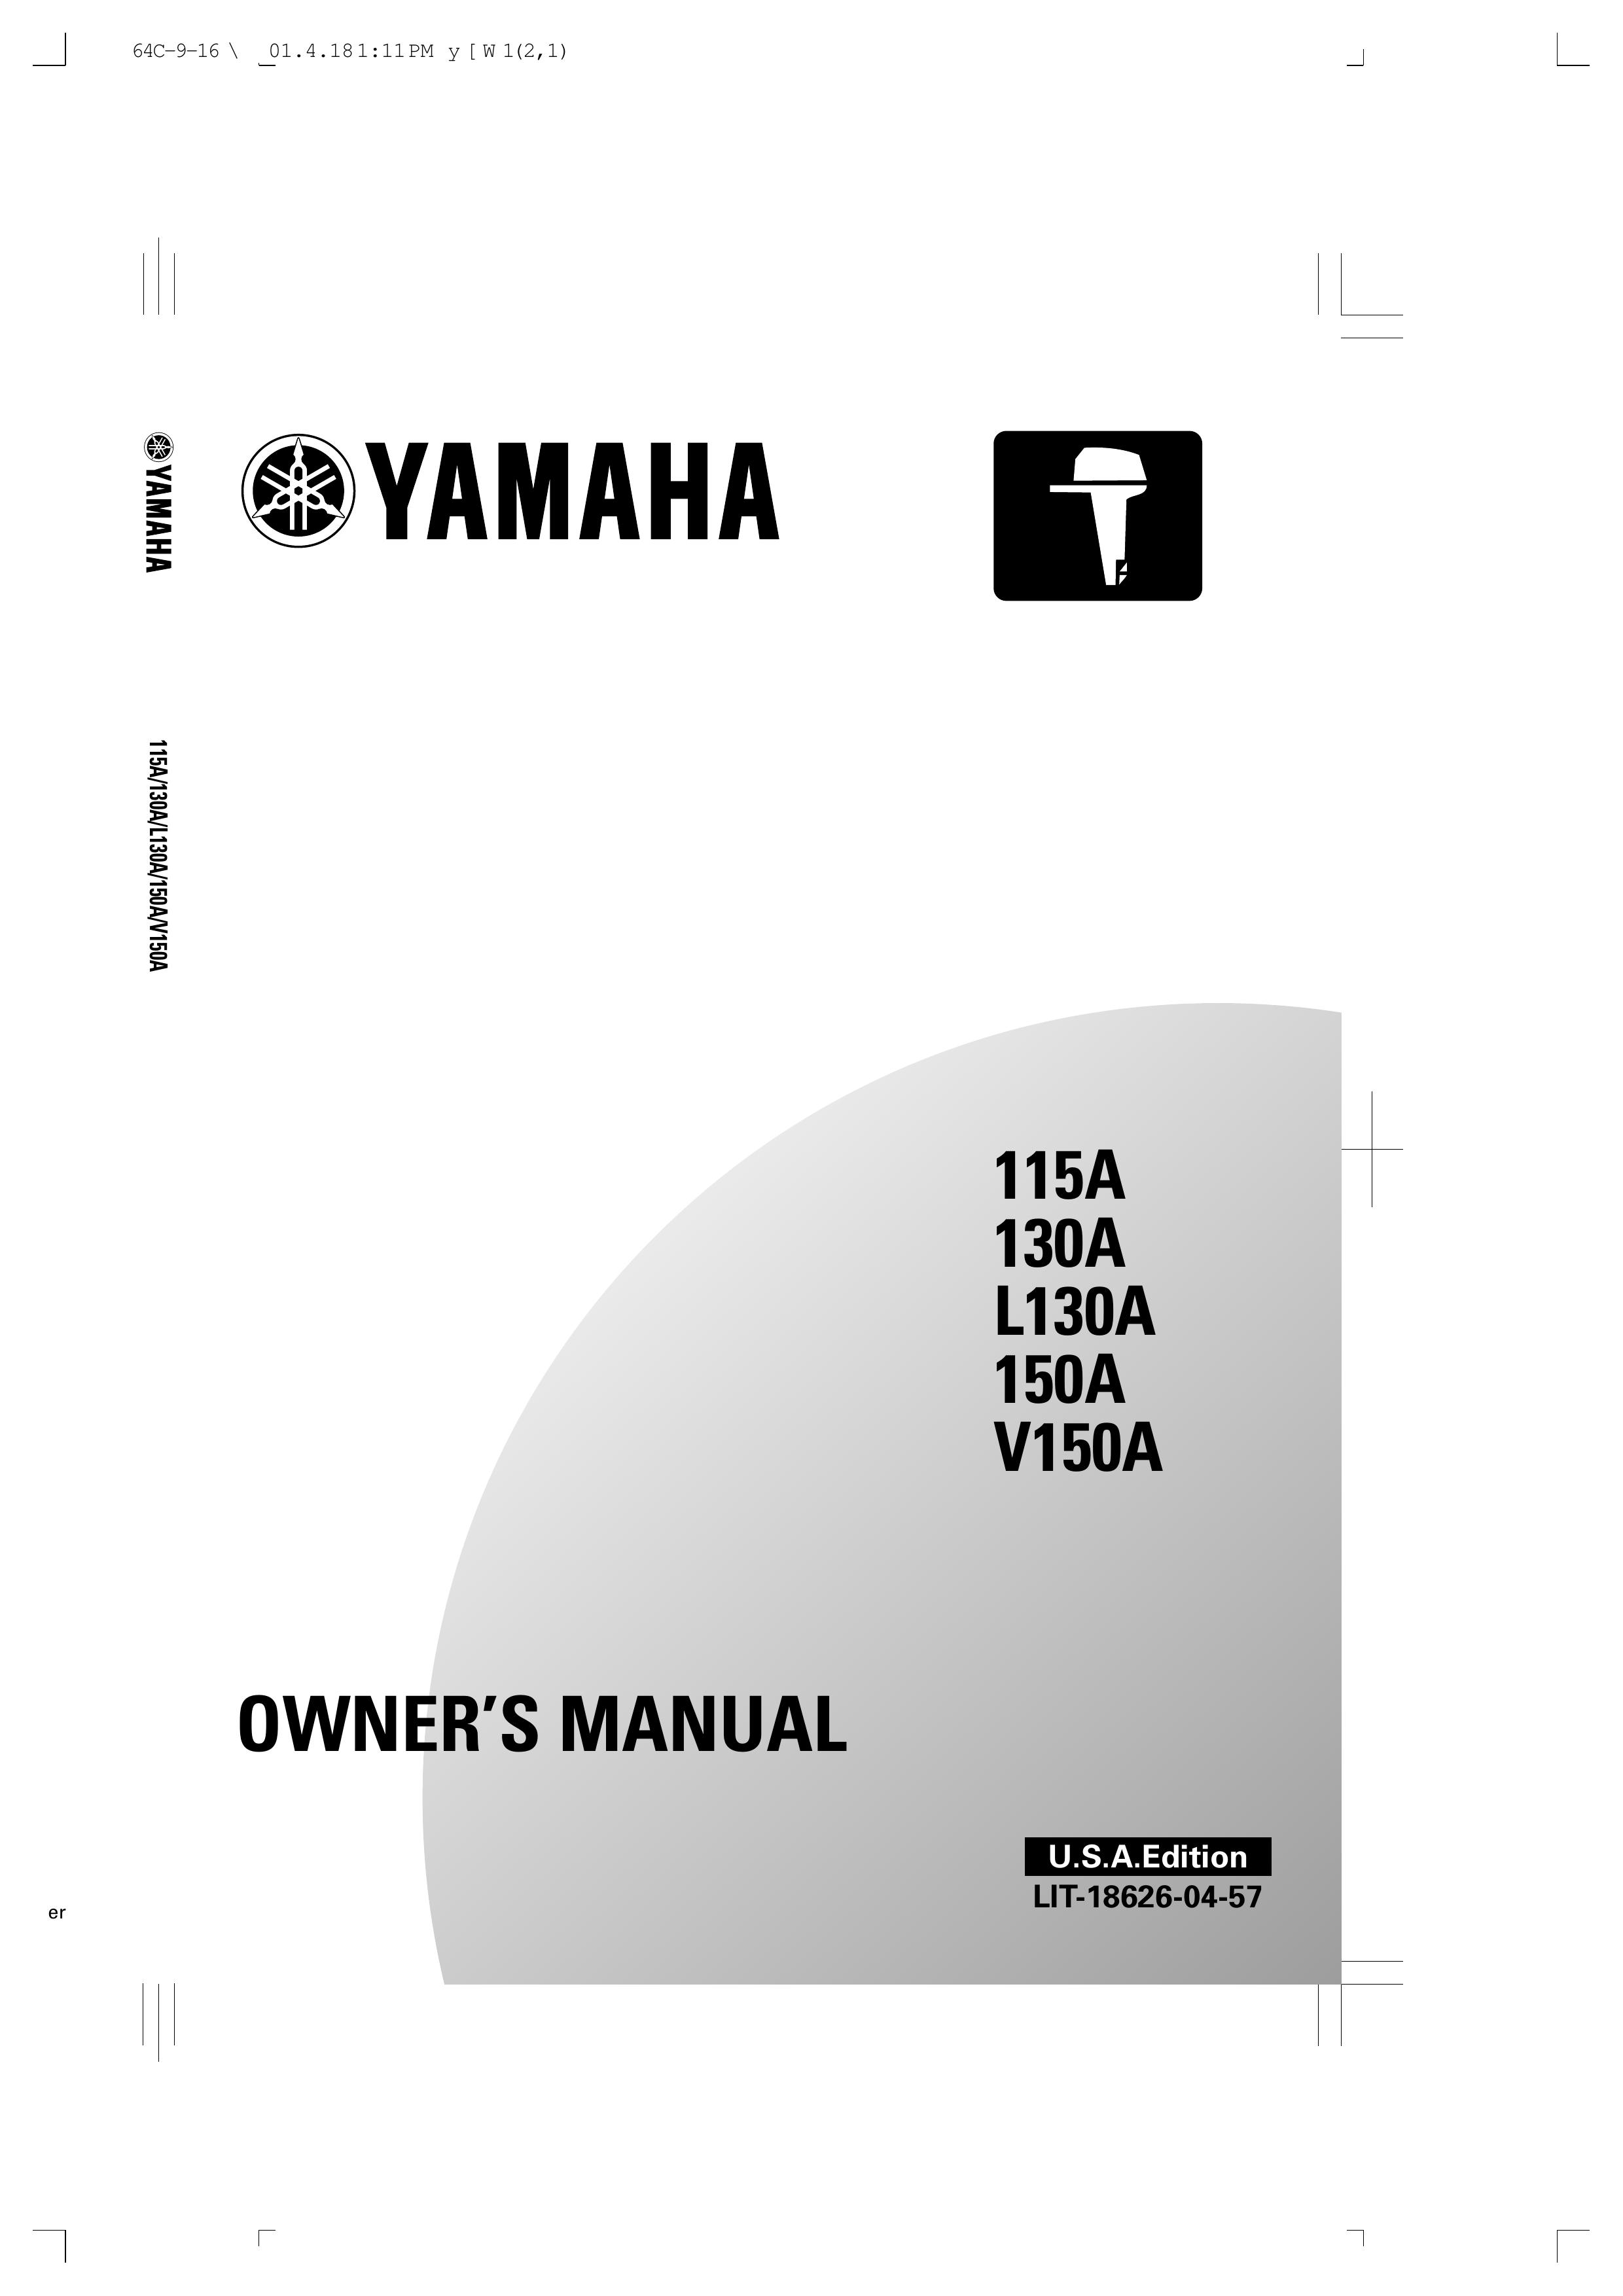 Yamaha L130A Outboard Motor User Manual